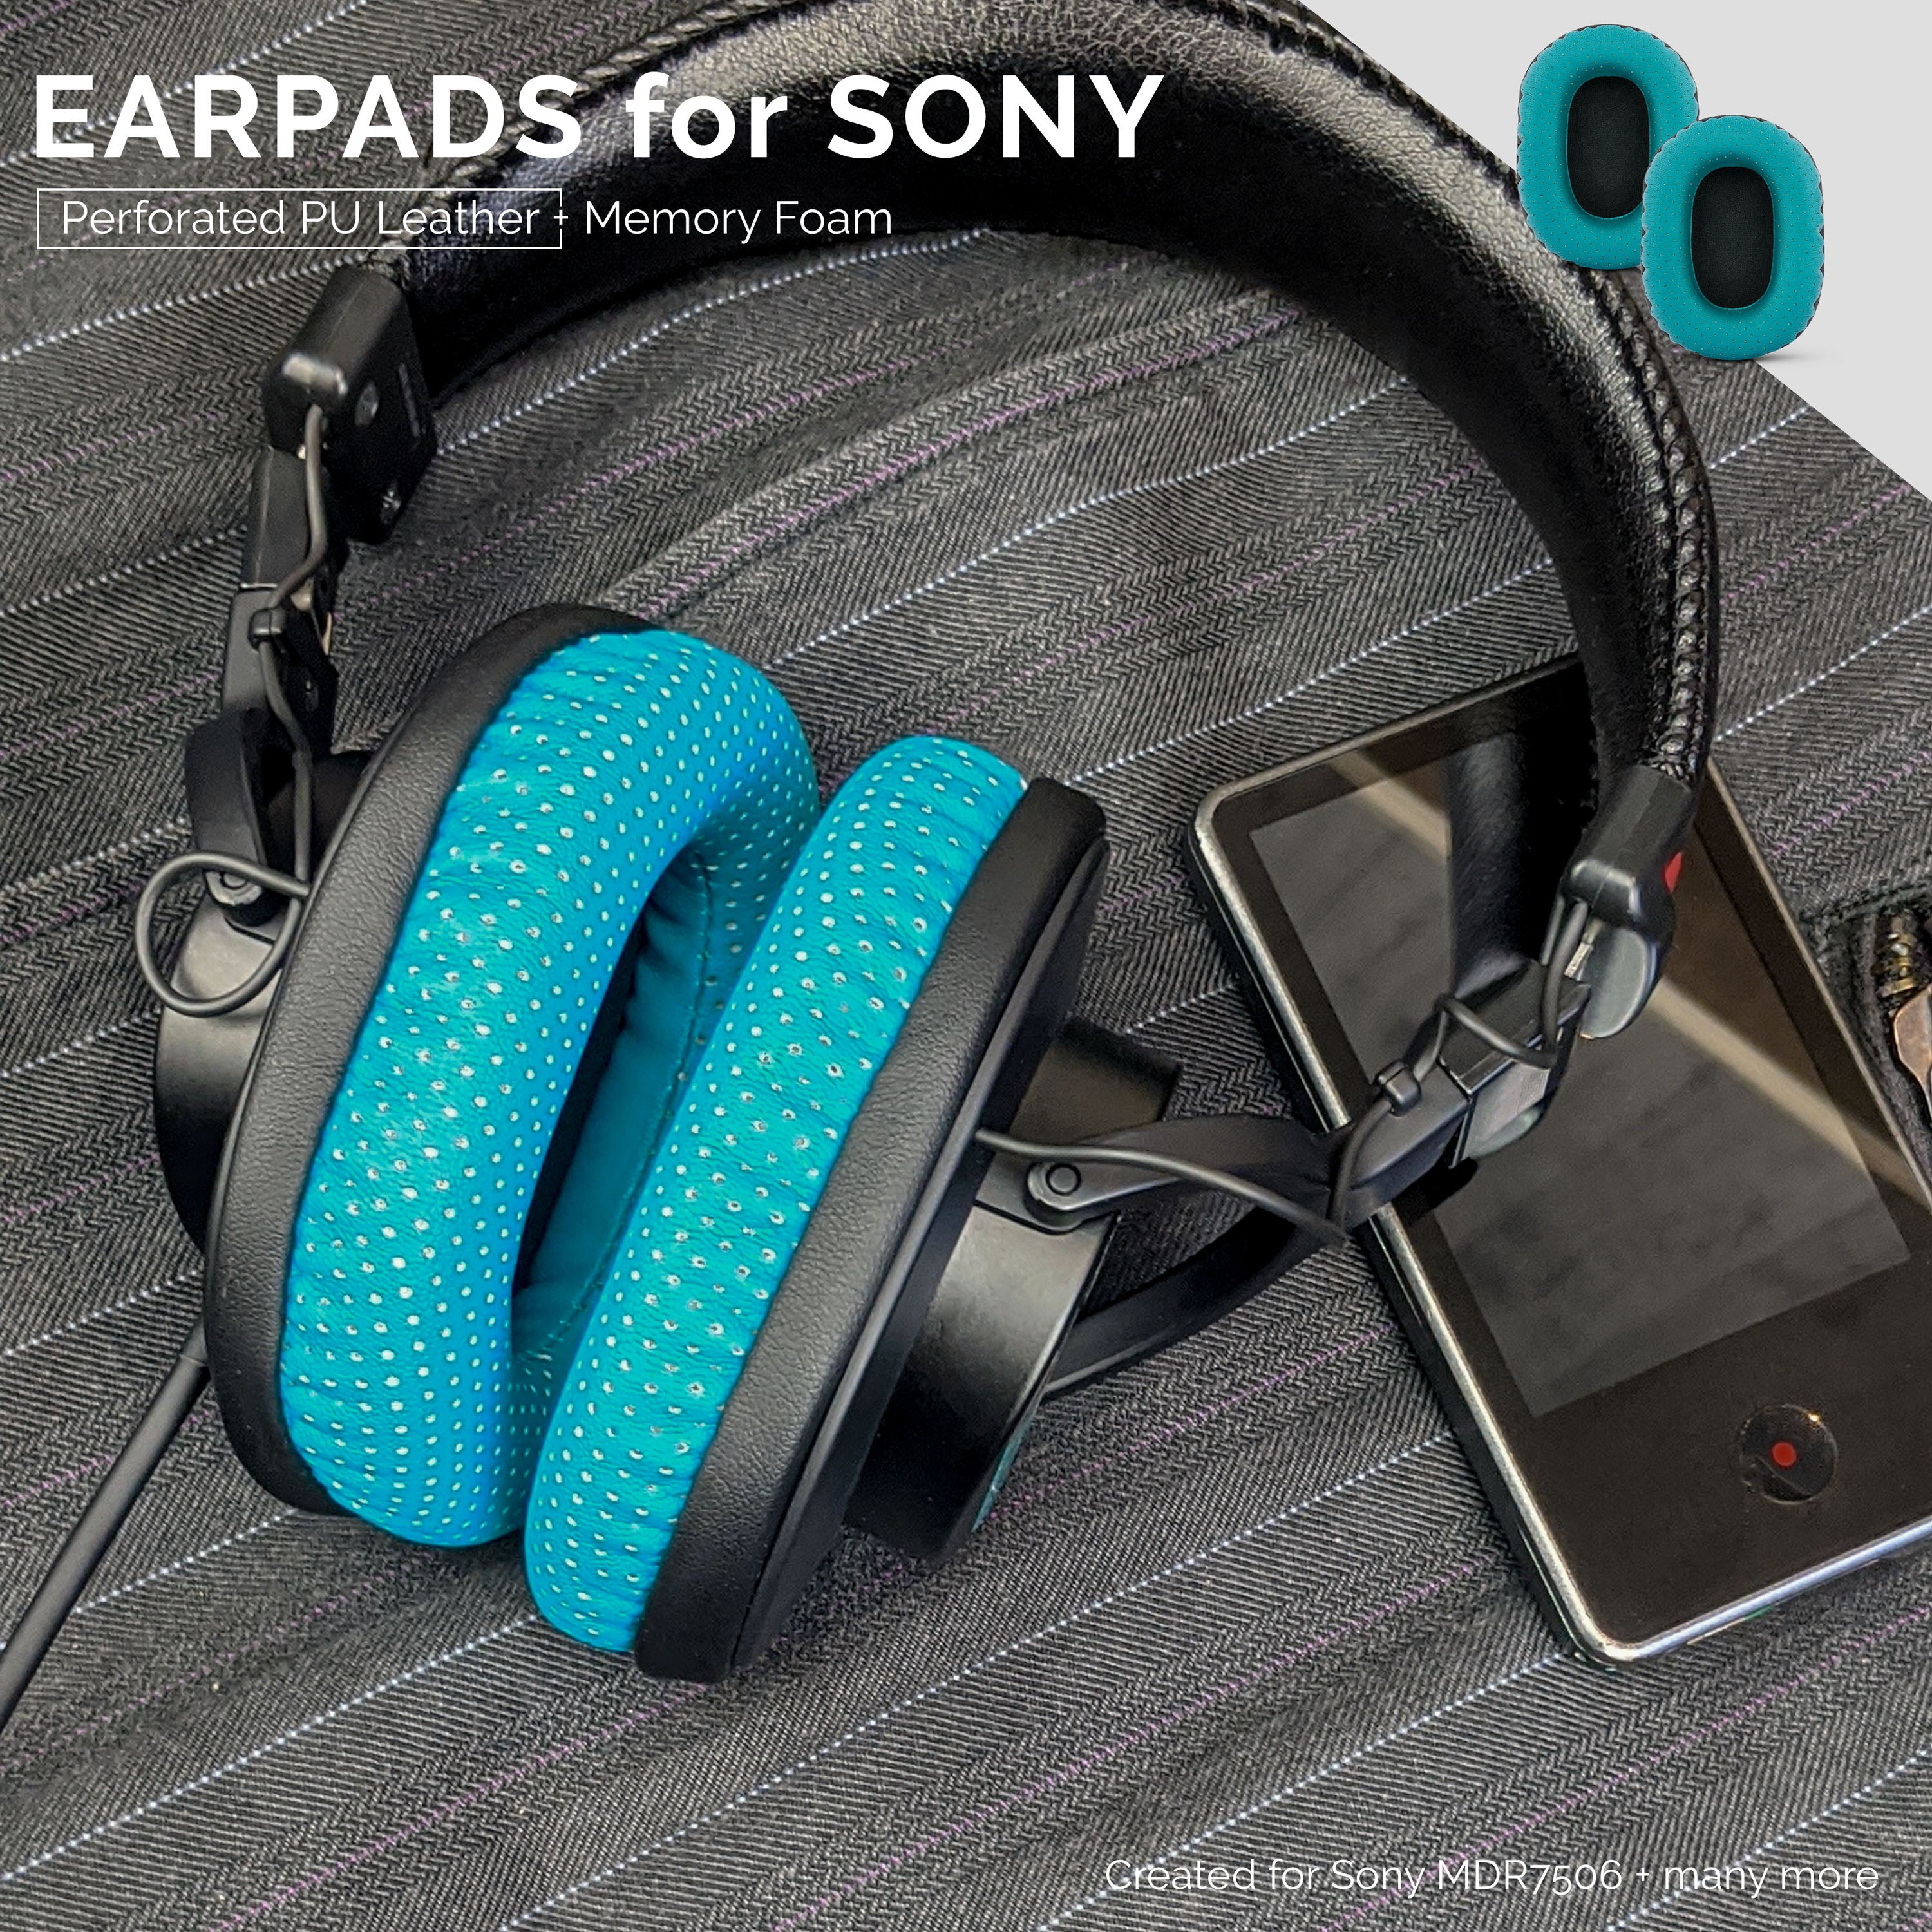 Accesorio auriculares - Almohadillas negras para auriculares Sony MDR-7506  / V6 / CD 900ST. INF, negro